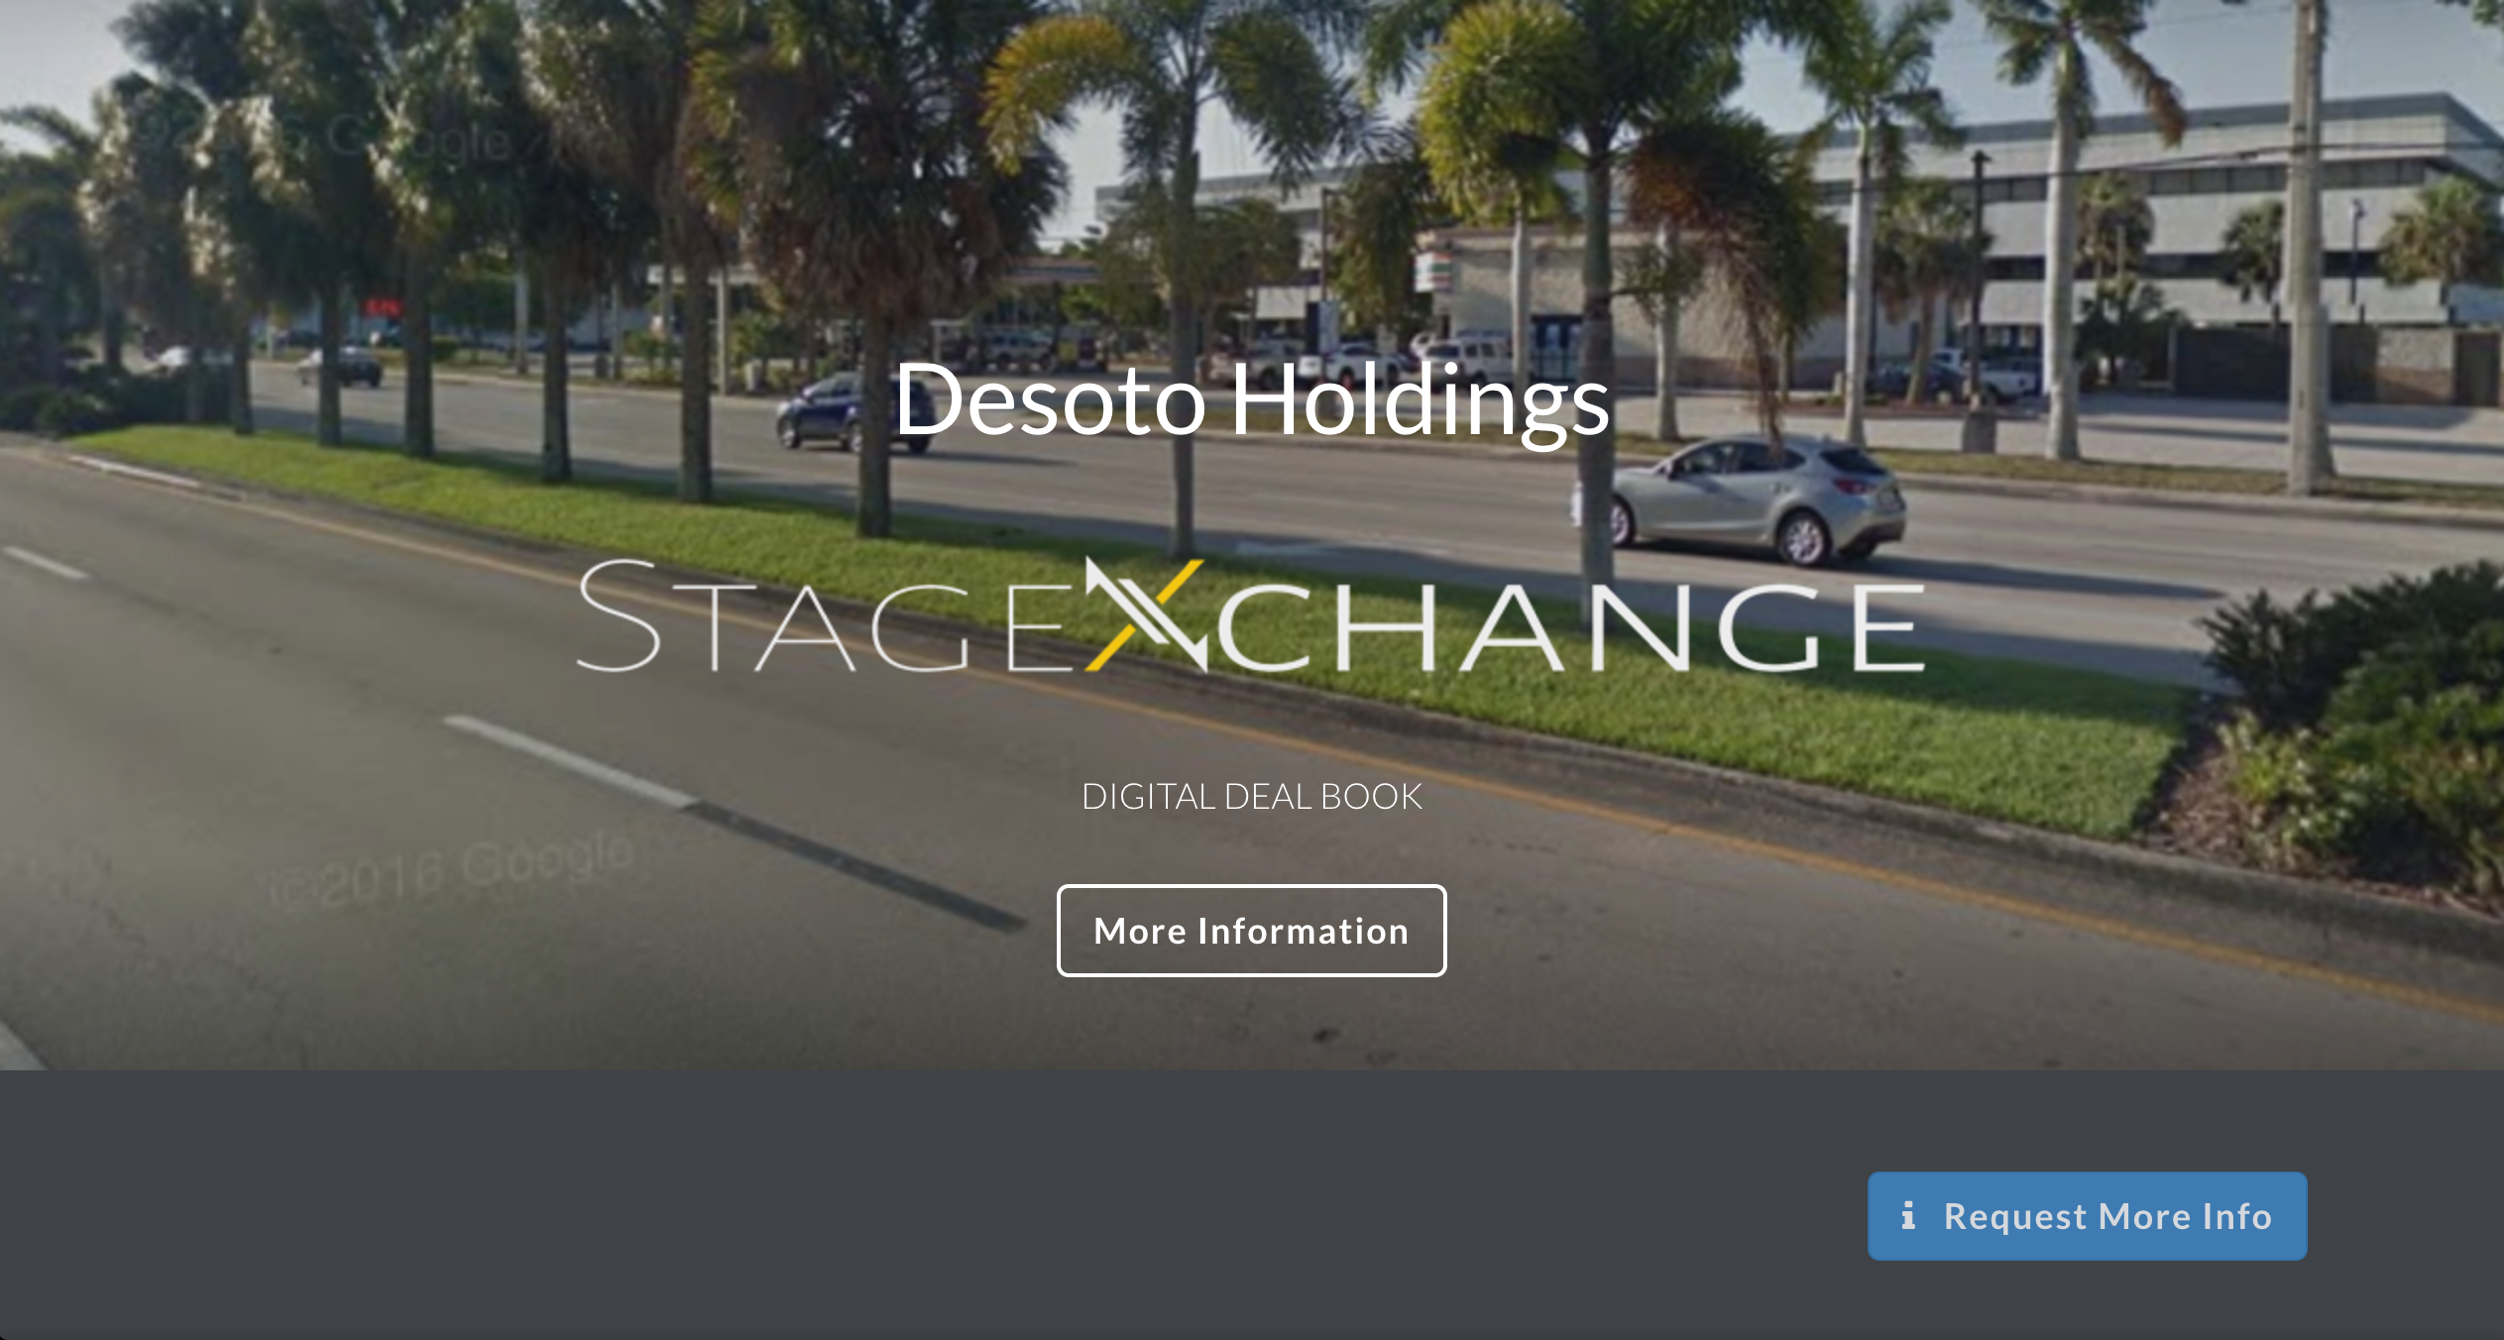 Desoto Holdings